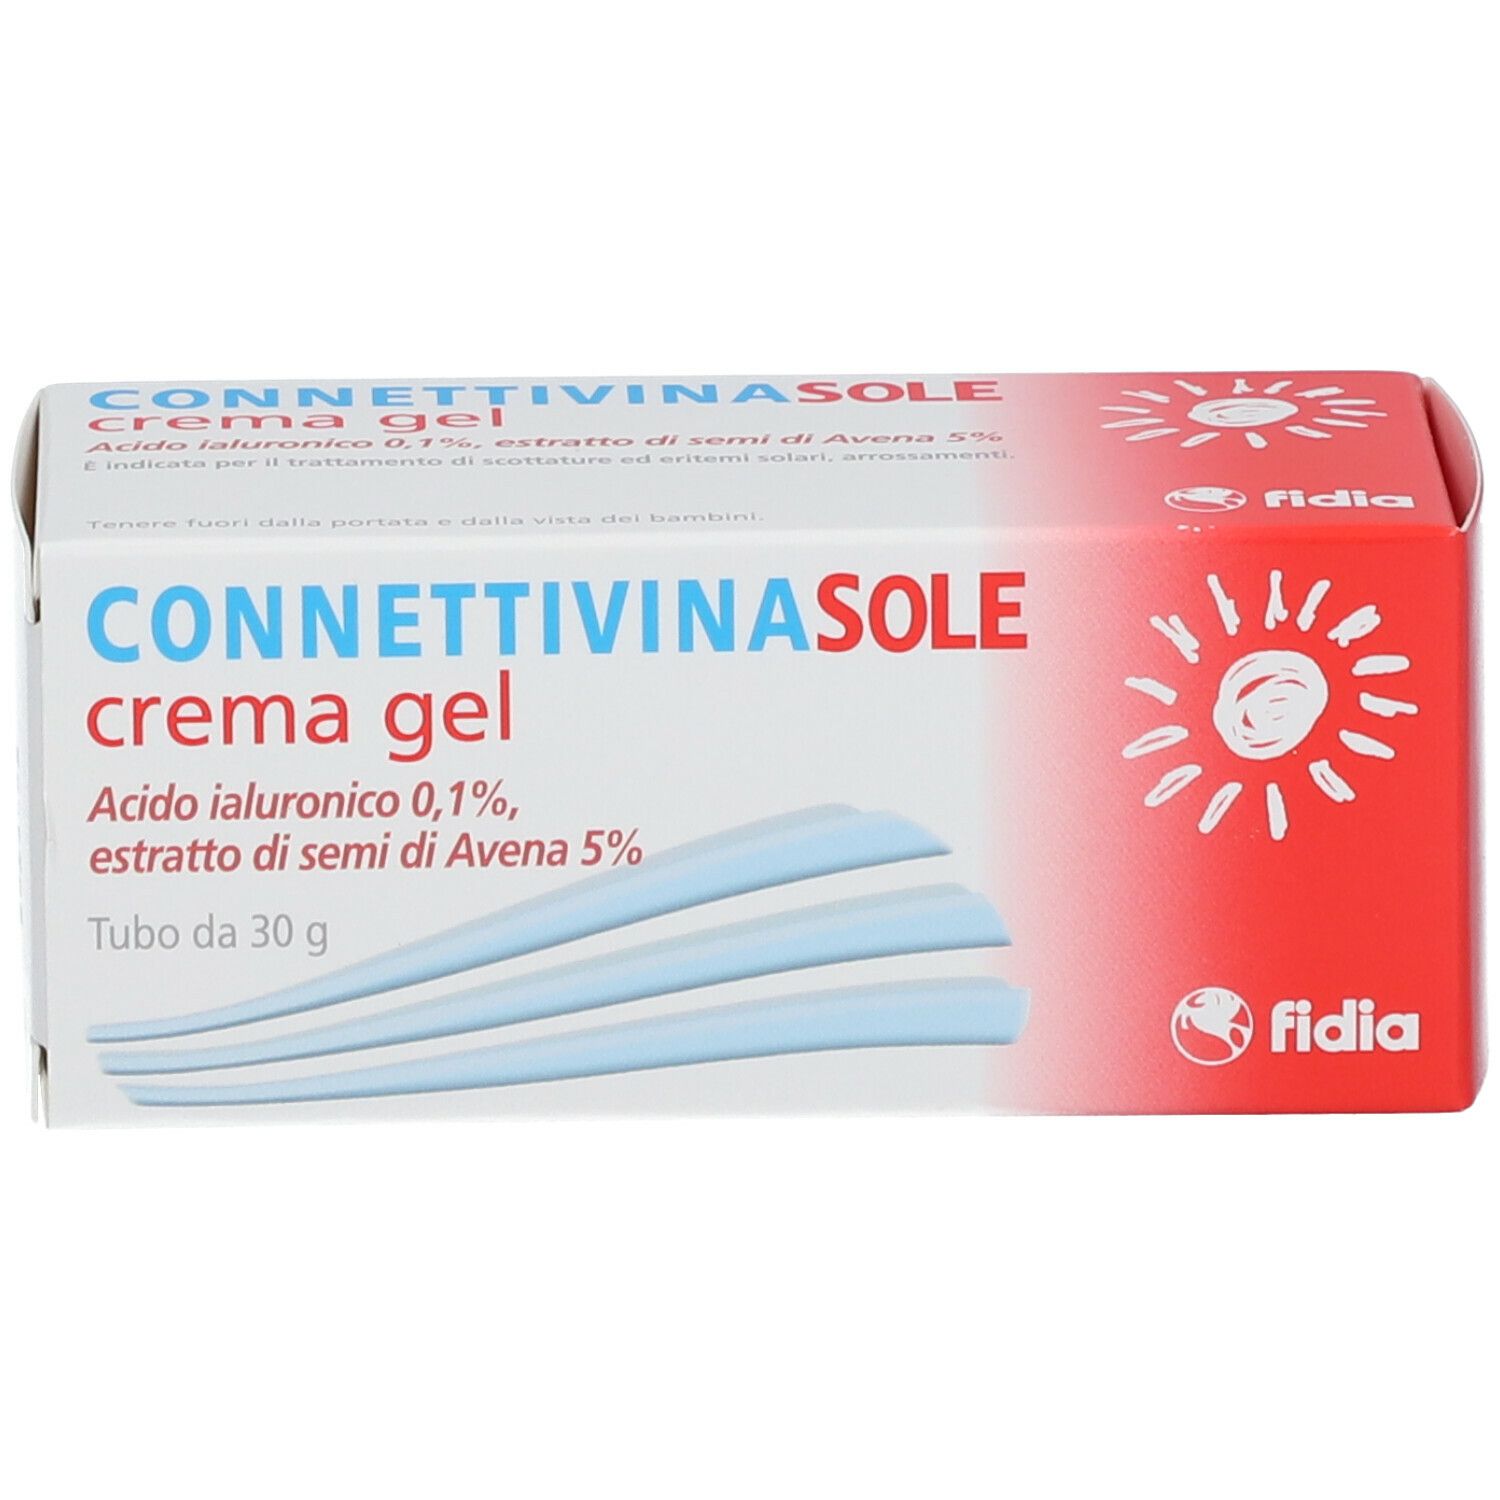 ConnettivinaSole Crema Gel